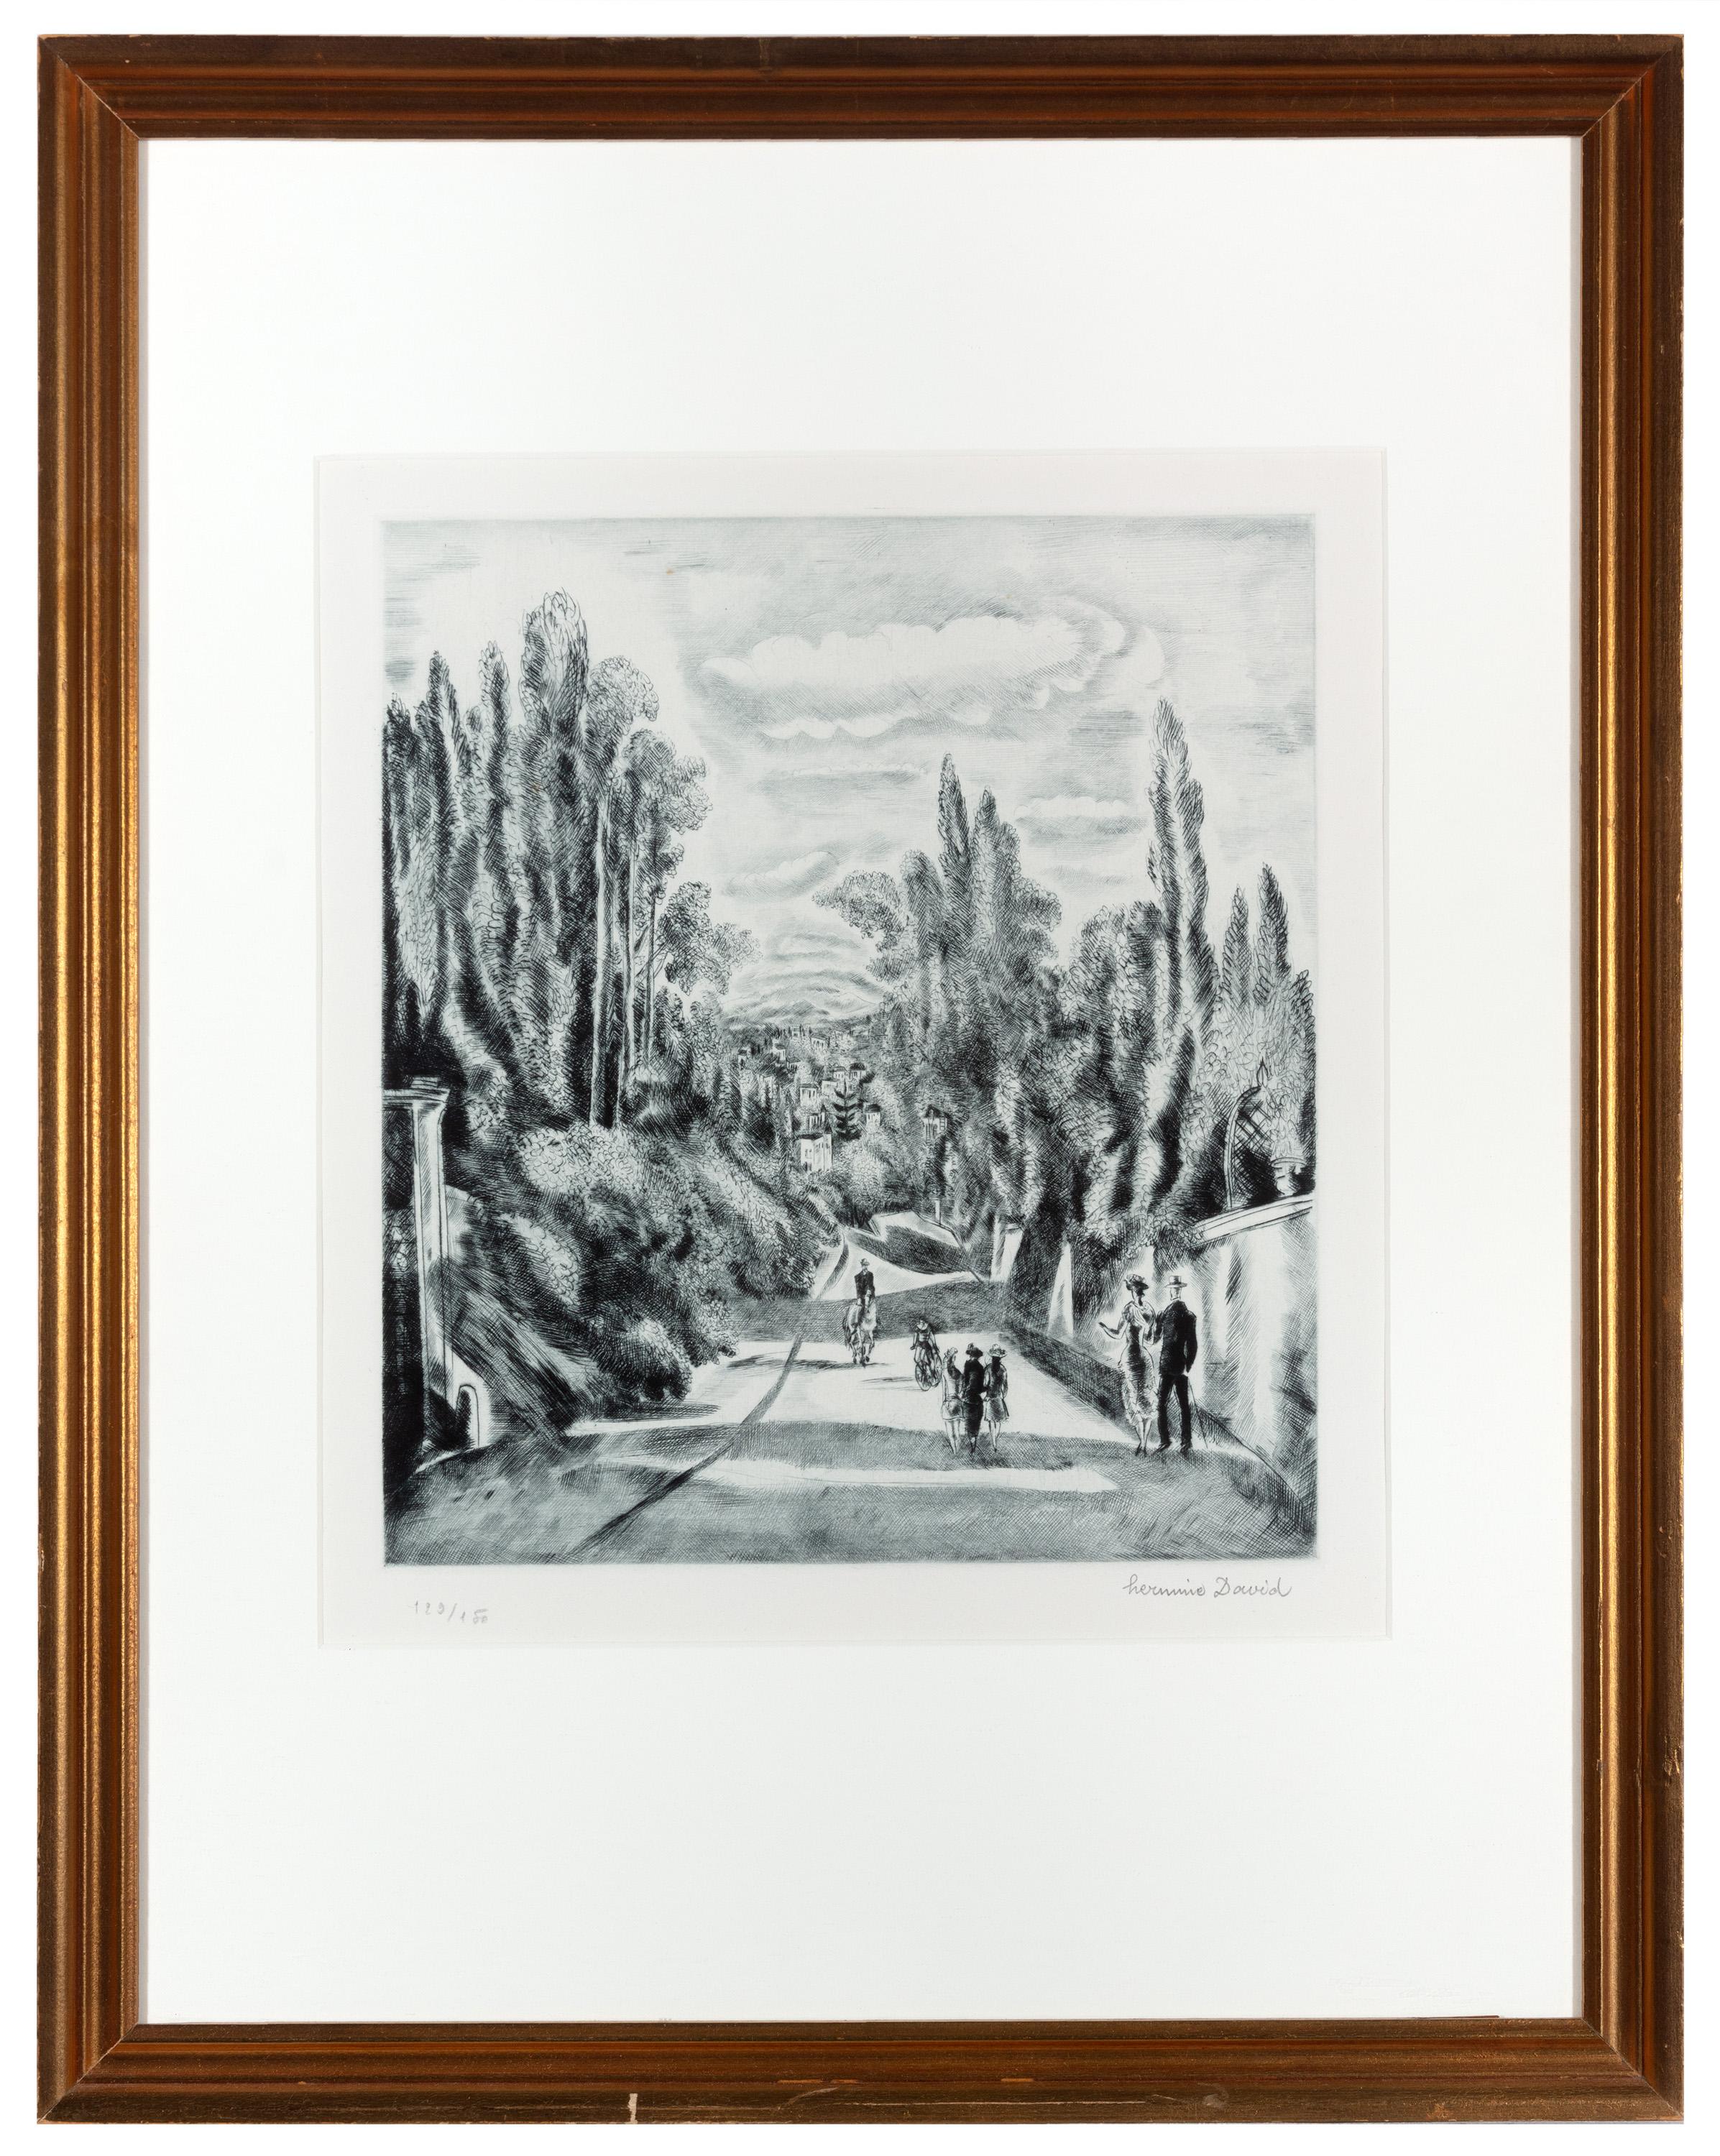 Hermine David Landscape Print - "Passage a Village, " Original Drypoint, Signed